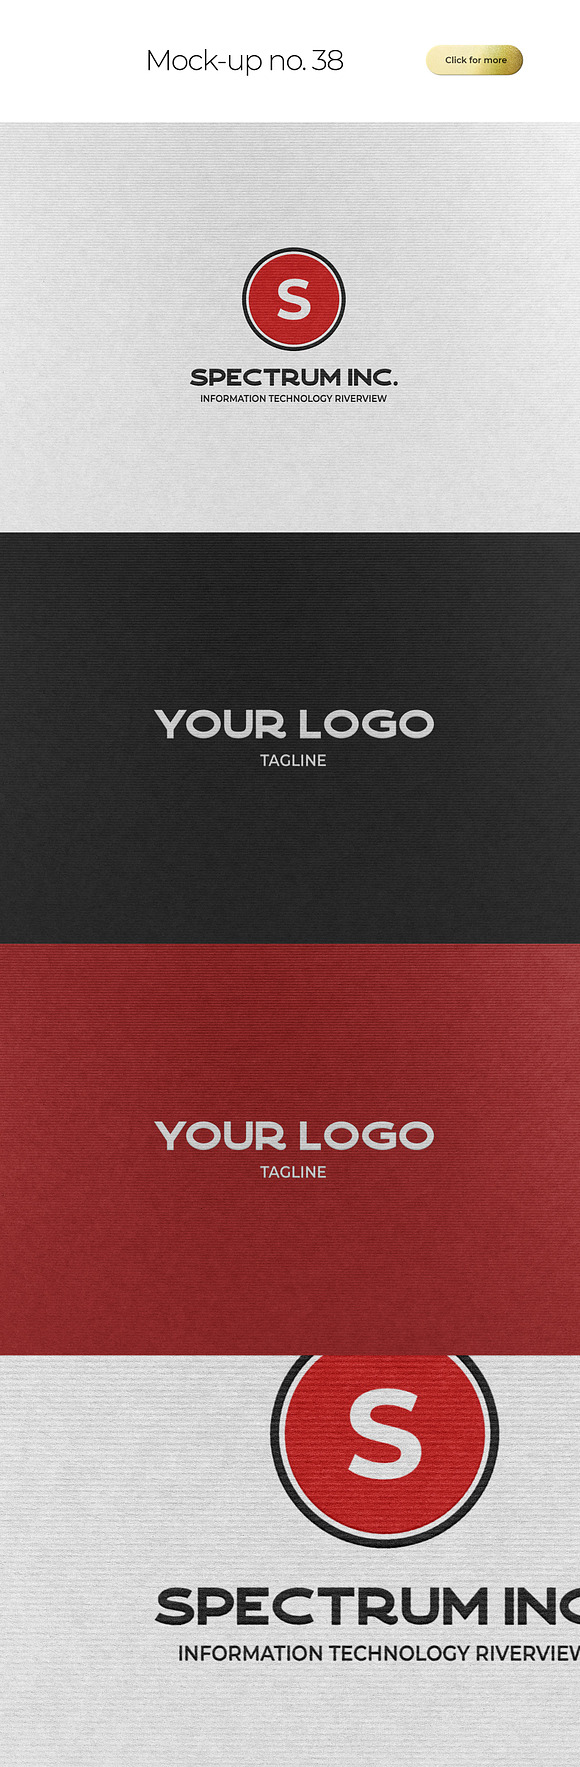 50 logo mockup branding bundle in Branding Mockups - product preview 39